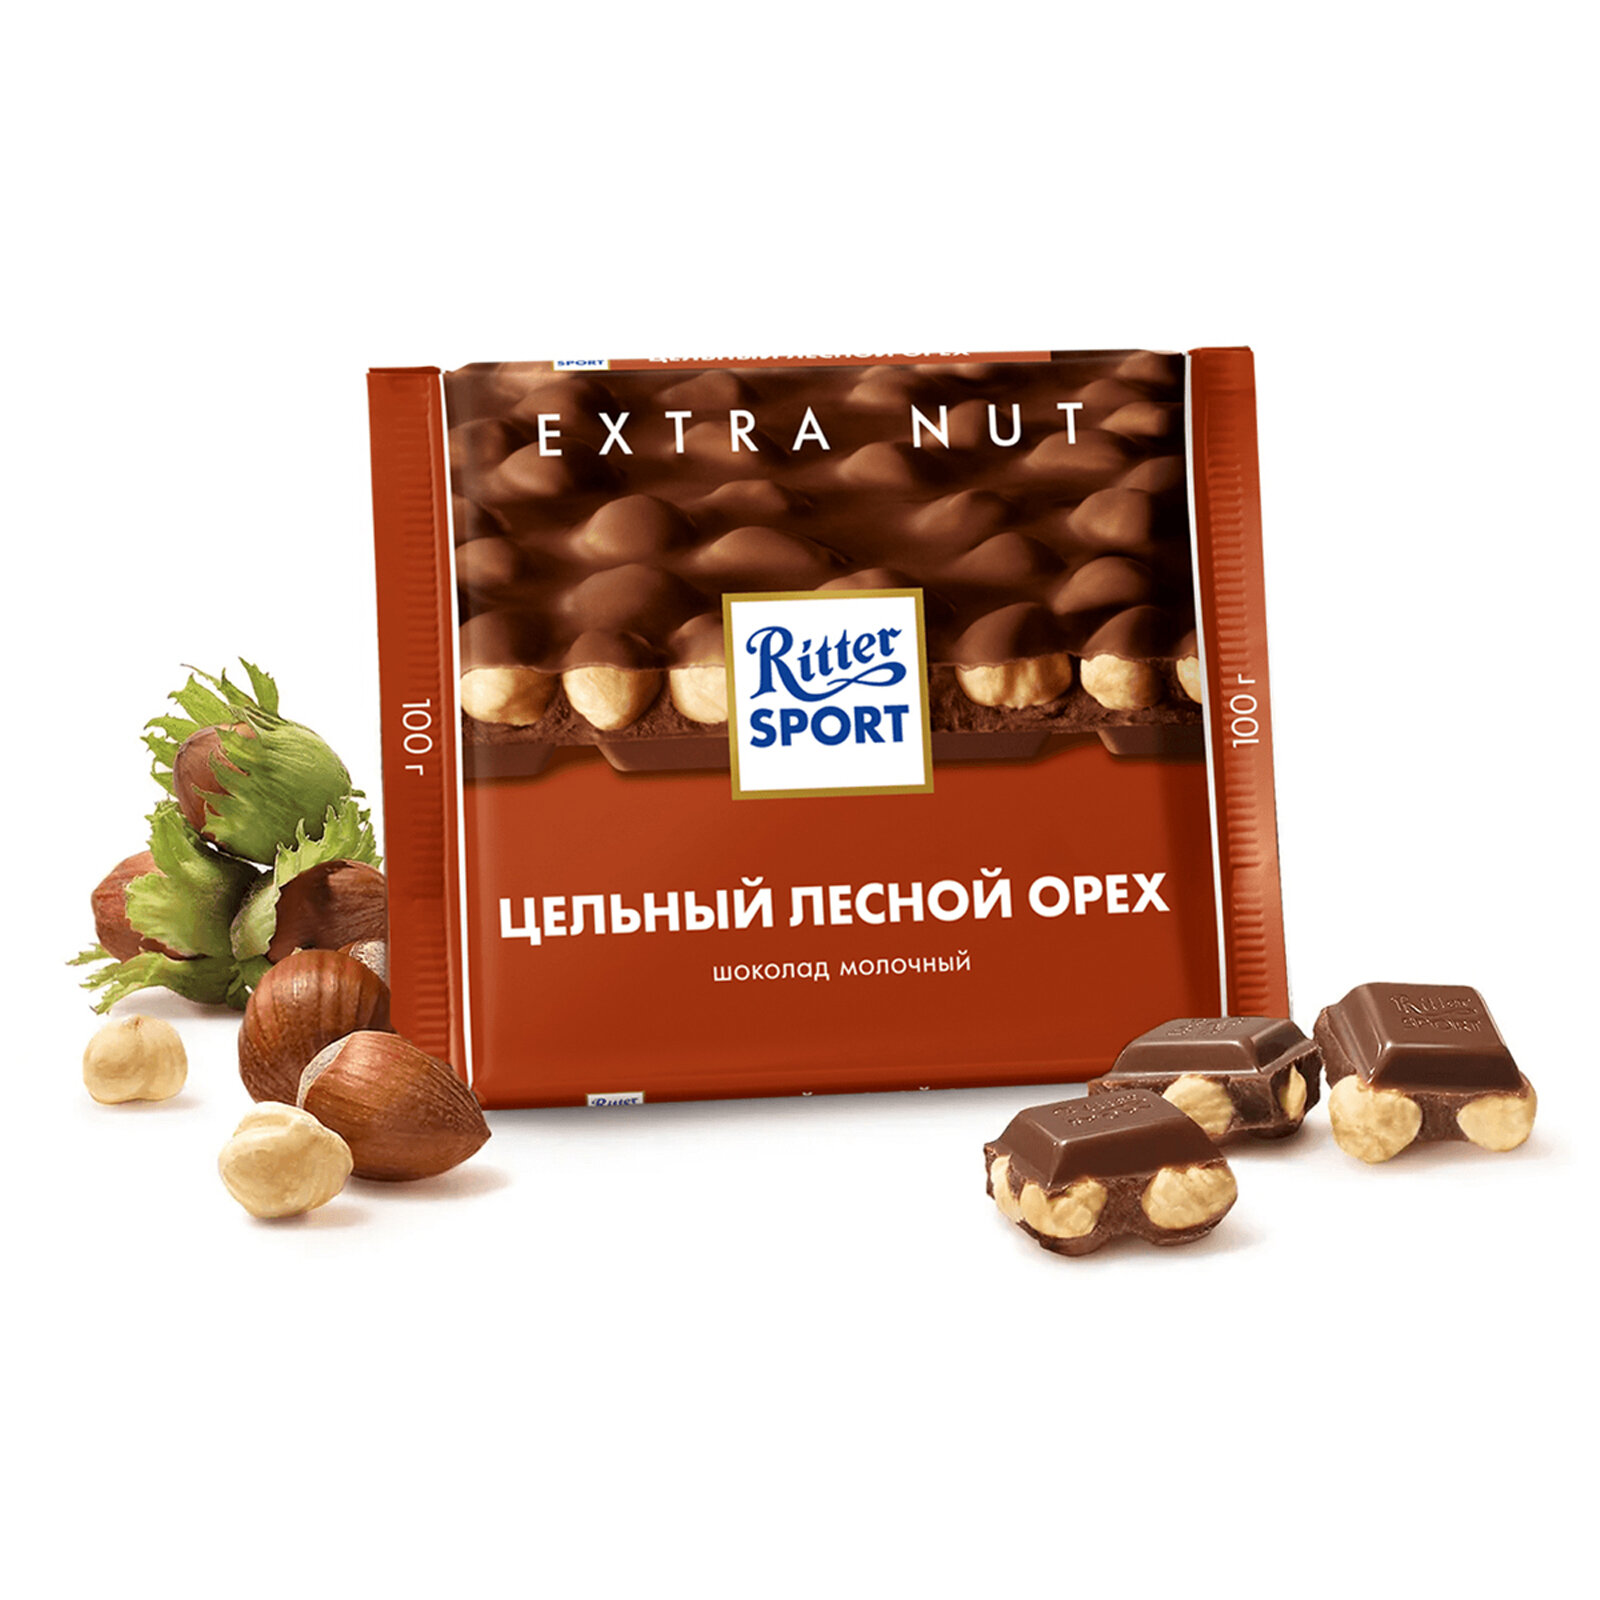 Шоколад молочный Ritter Sport Extra Nut, 2 штуки по 100г.